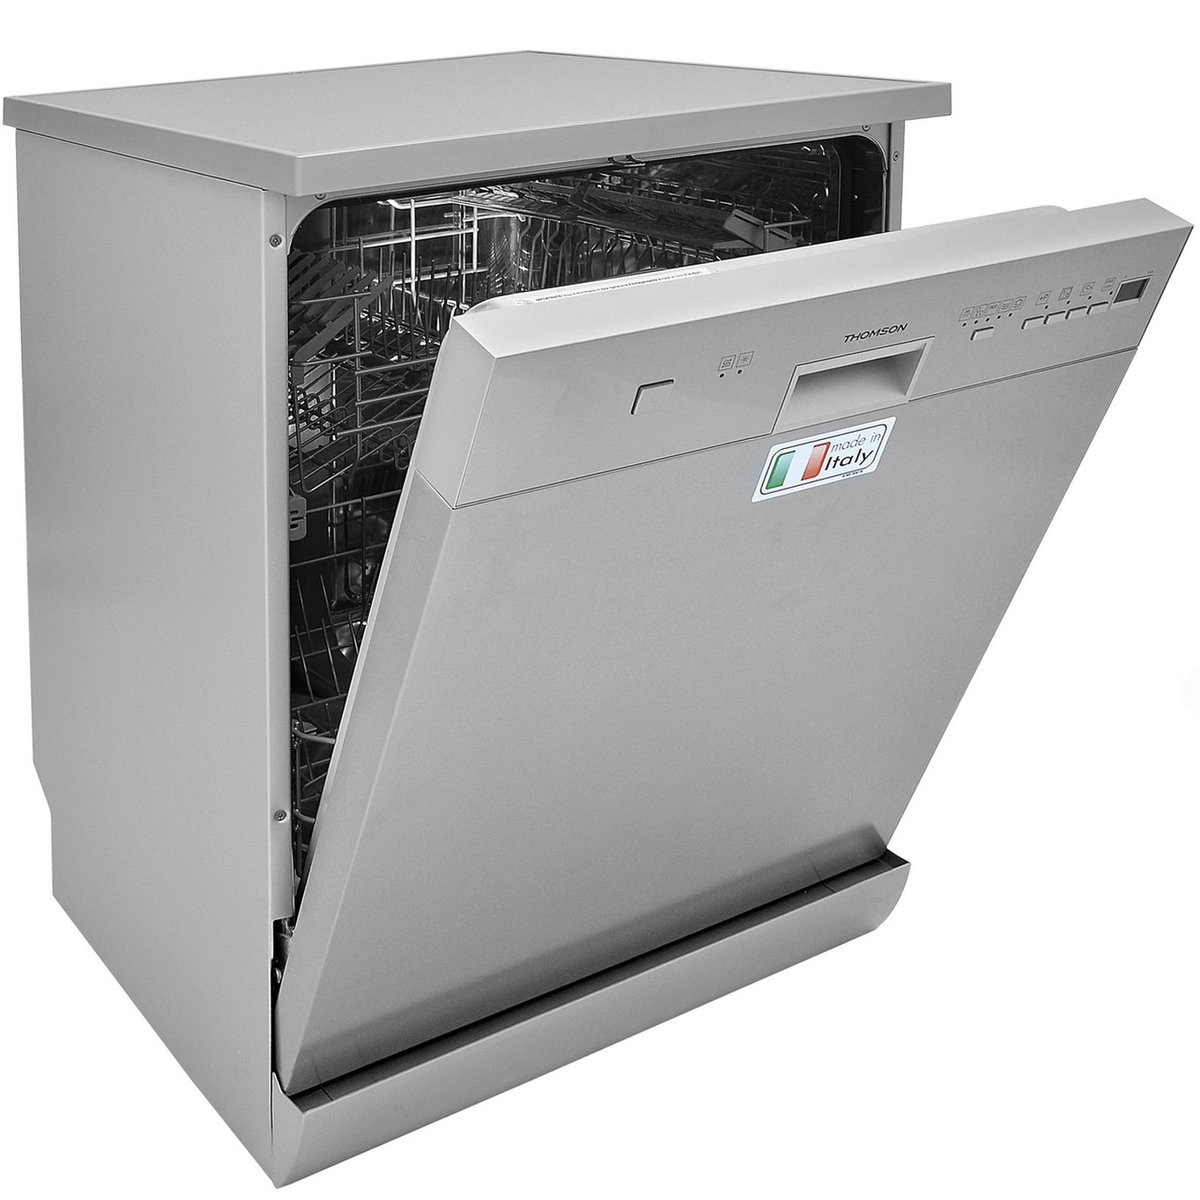 Thomson Dishwasher TDW12S 11Programs